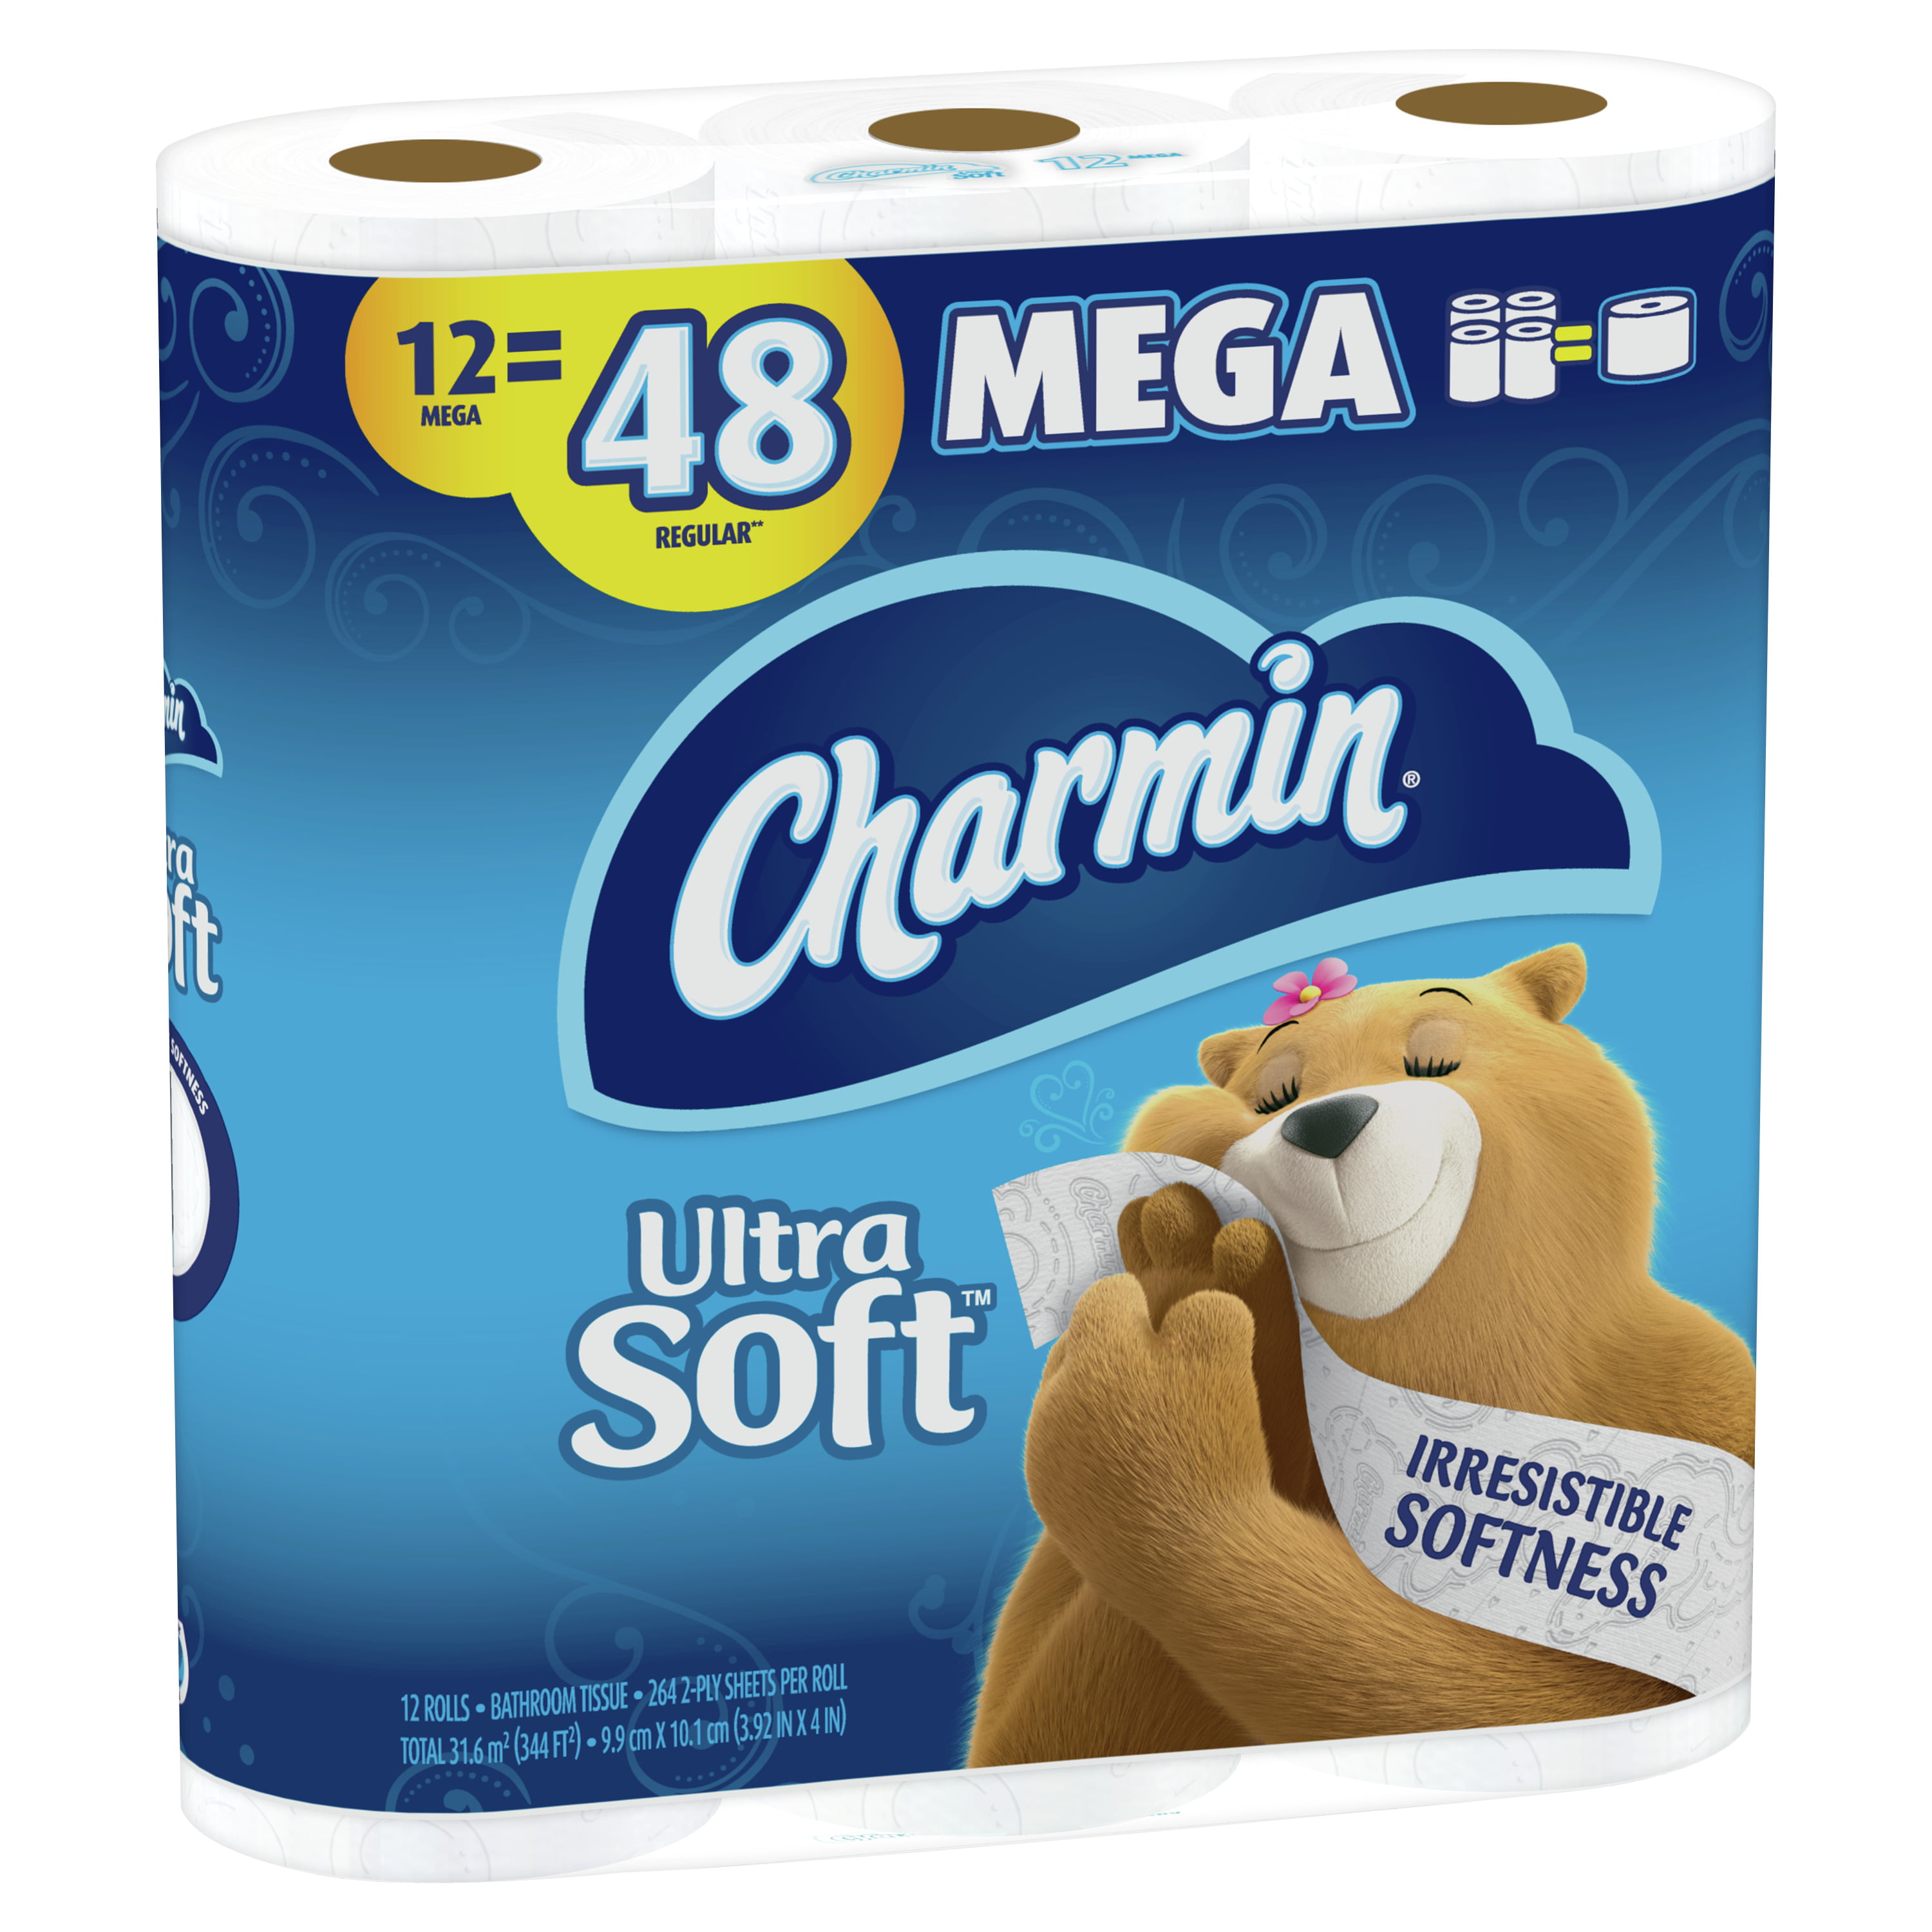 Charmin Toilet Paper and Bath Tissue 